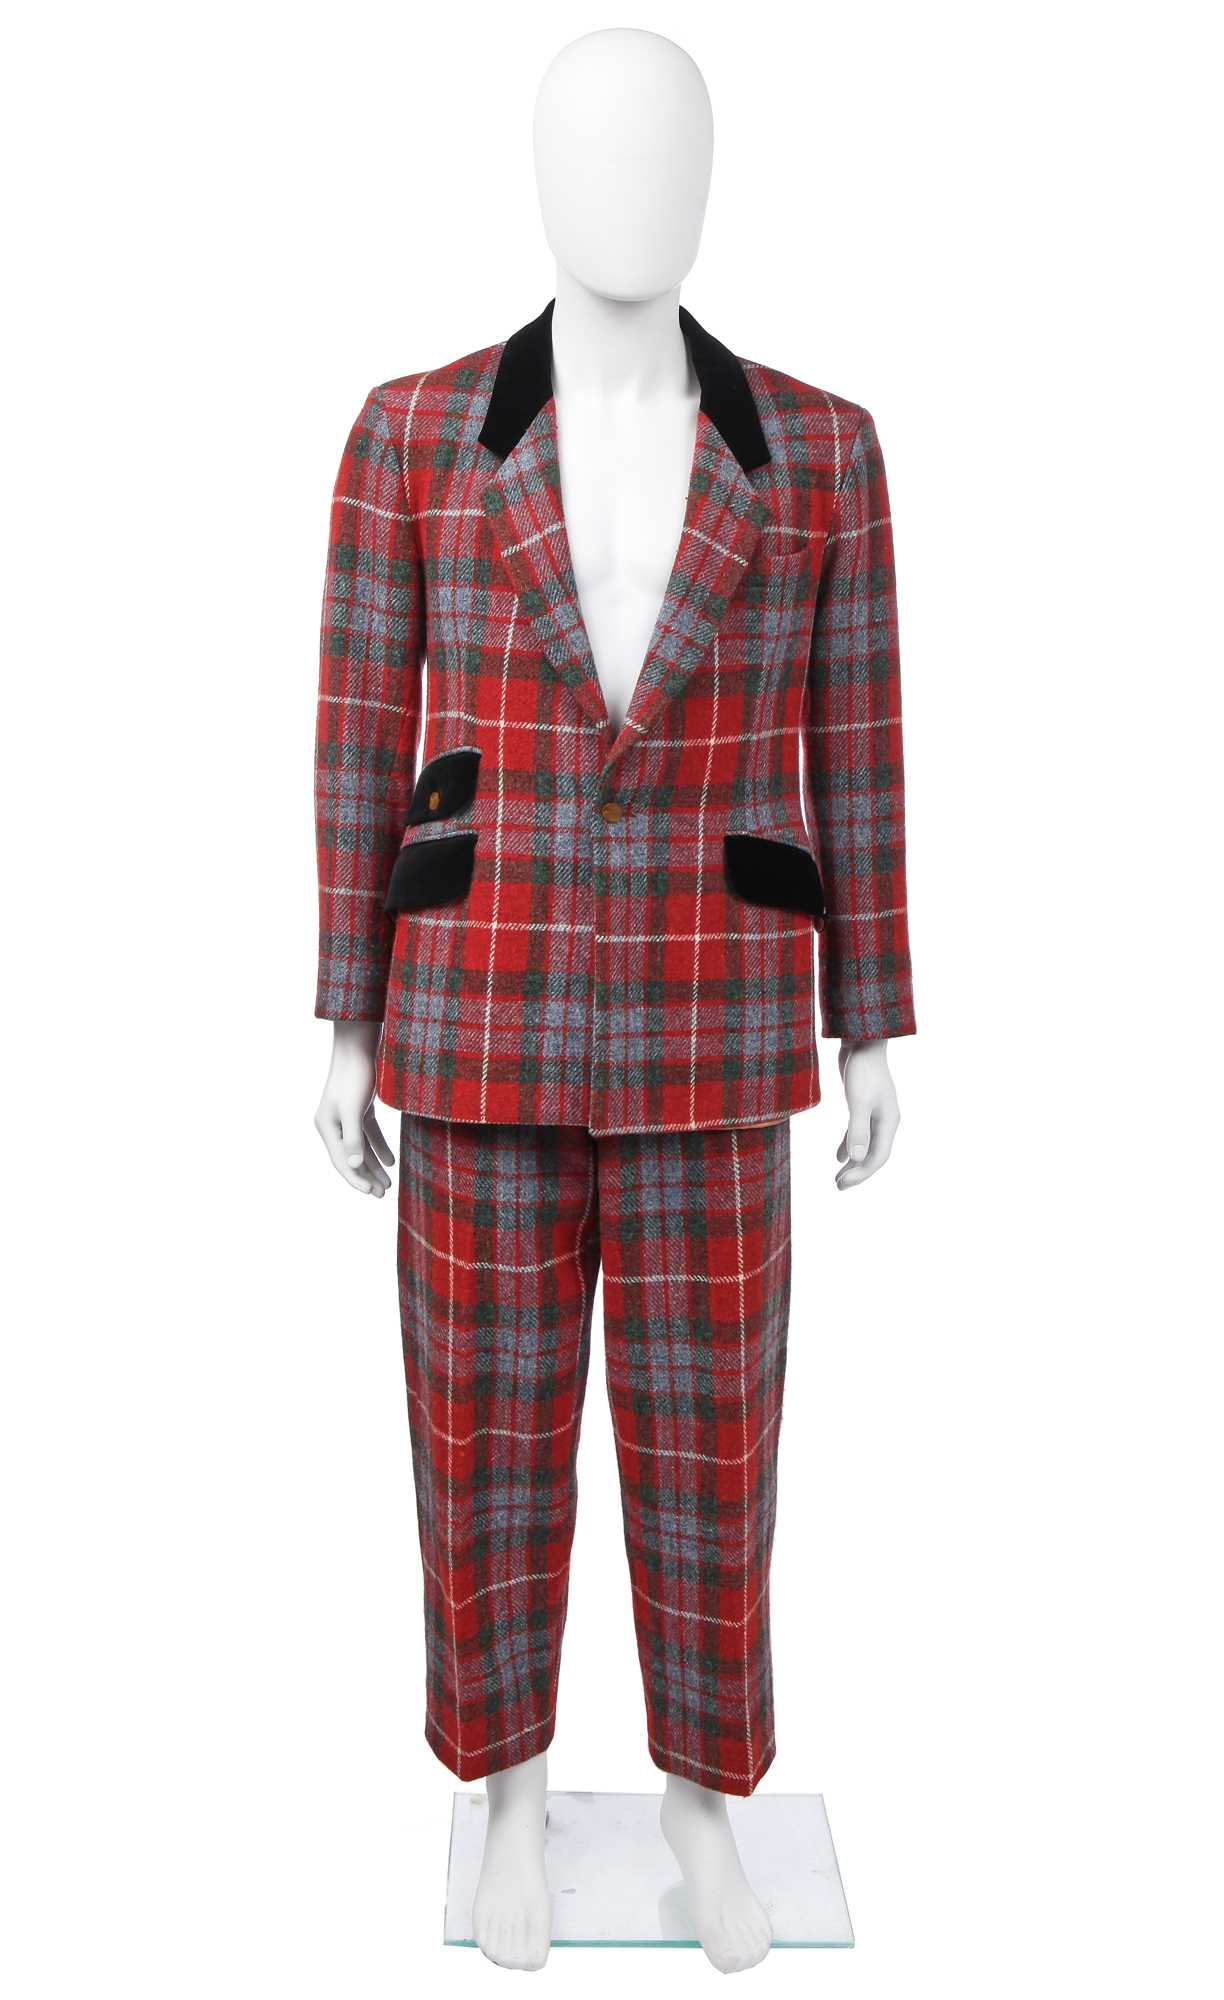 Lot 45 - A Vivienne Westwood men's Harris tweed tartan suit, 'Dressing Up' collection, Autumn-Winter, 1991-92